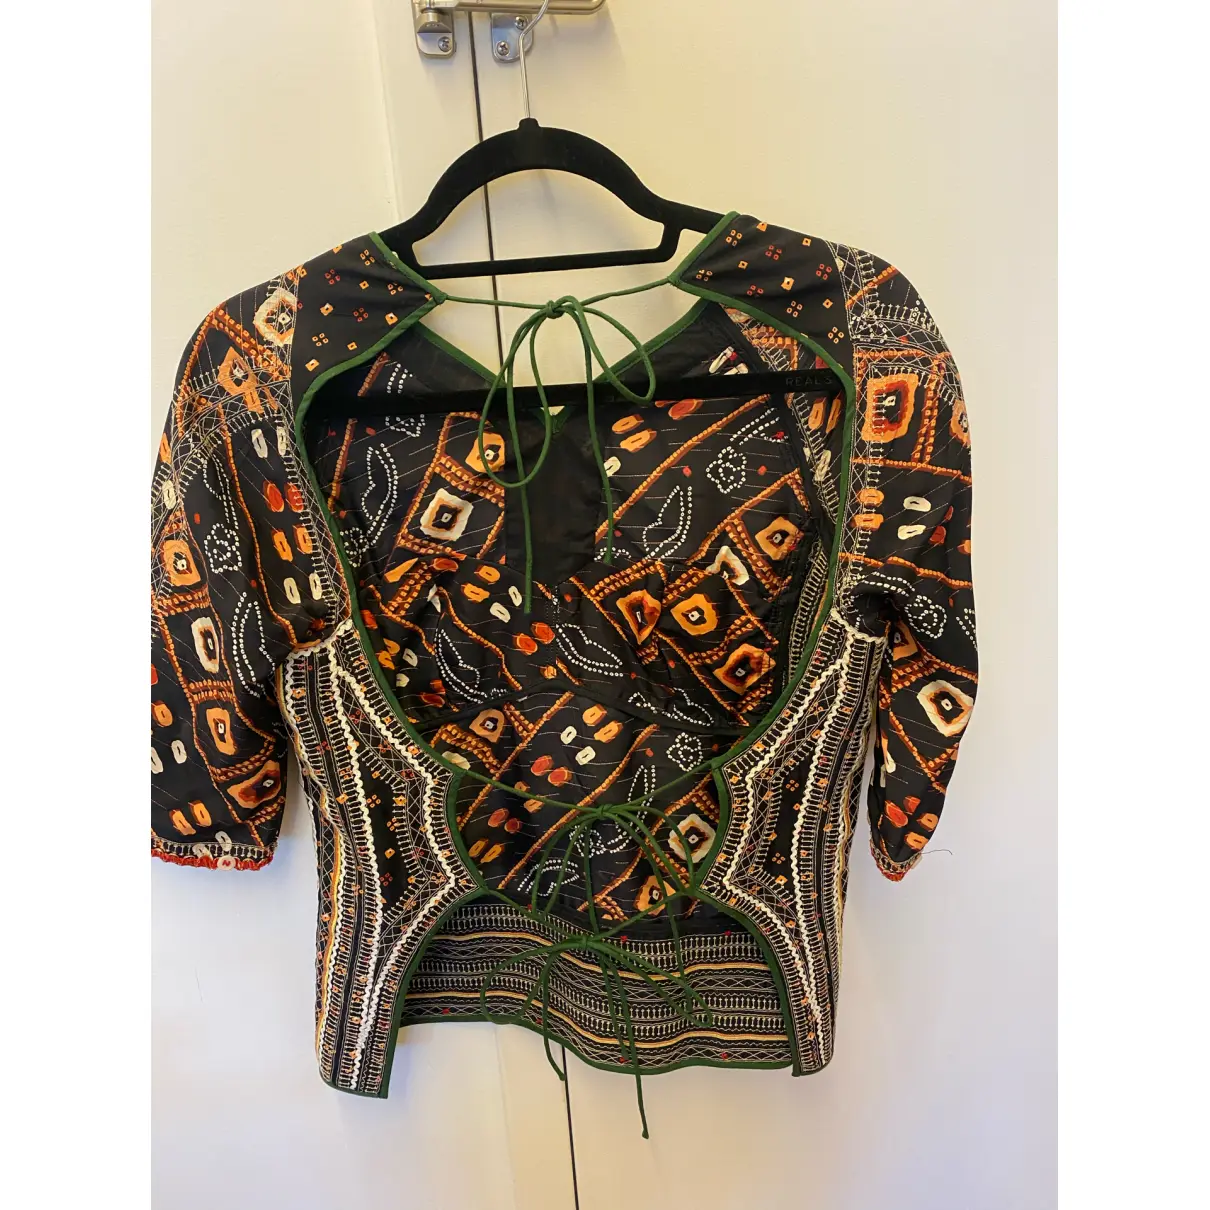 Buy Isabel Marant Silk shirt online